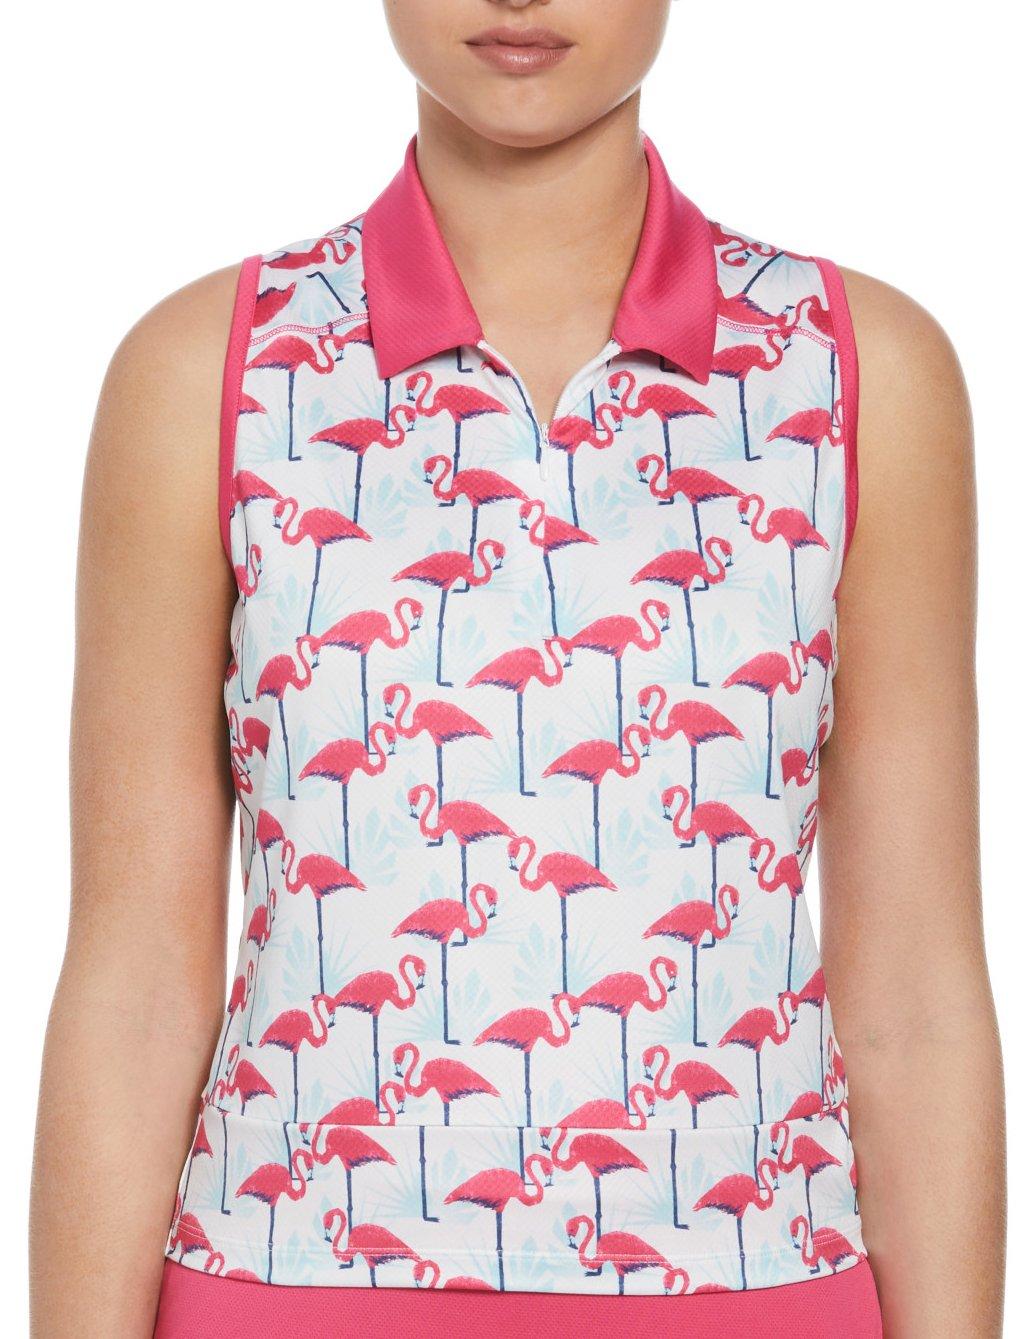 Womens Cropped Sleeveless Flamingo Print Top